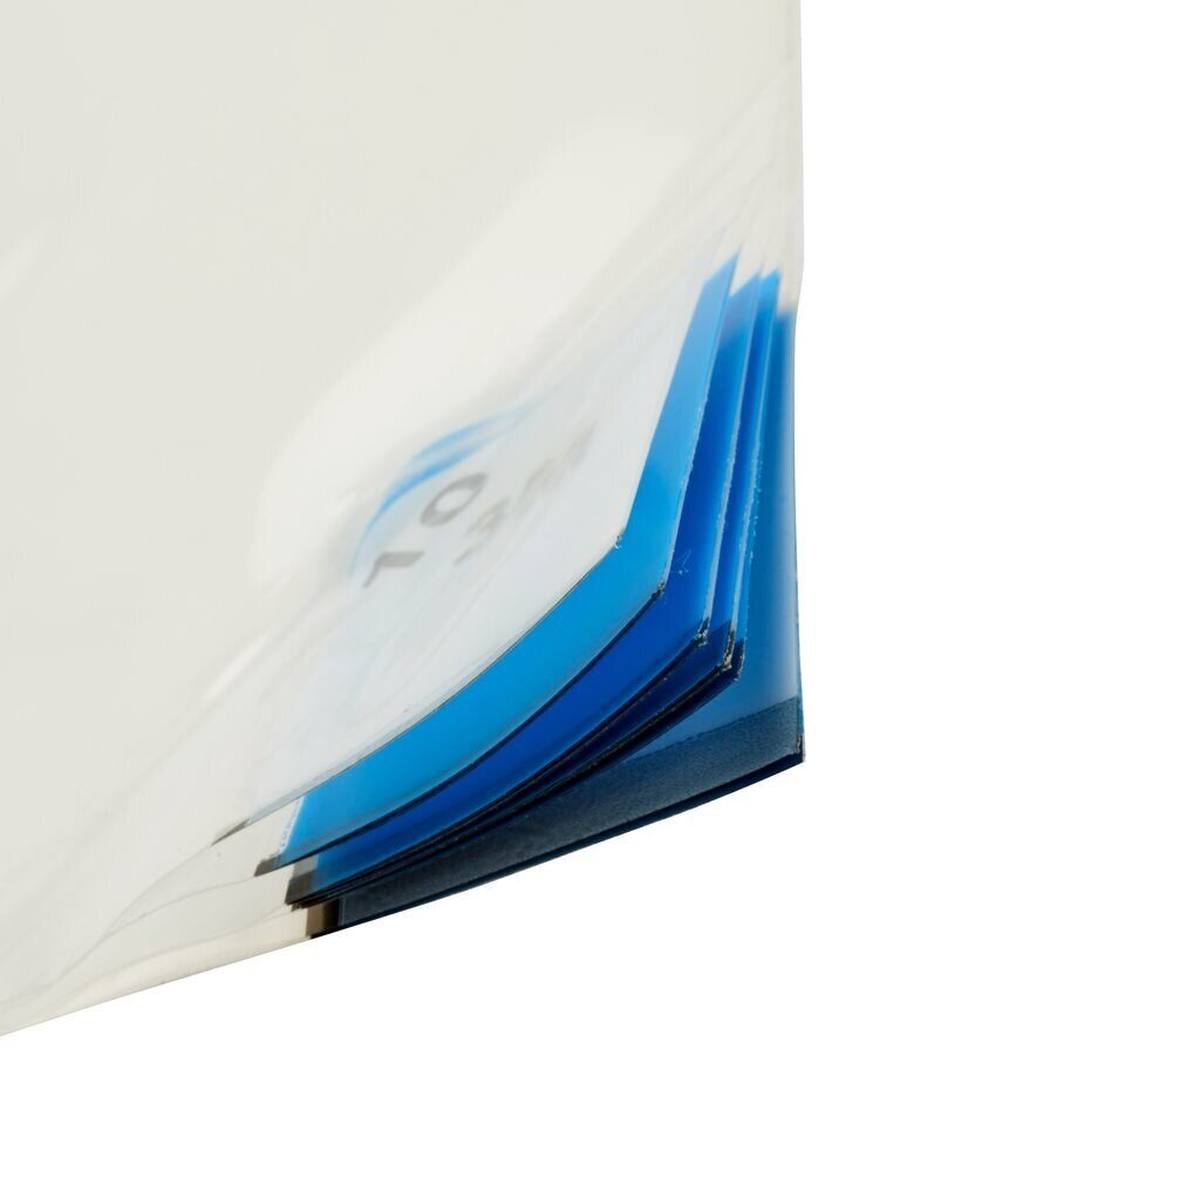 3M 4300 Estera adhesiva para polvo fino Nomad, blanca, 0,9 m x 0,45 m, 40 capas de polietileno transparente